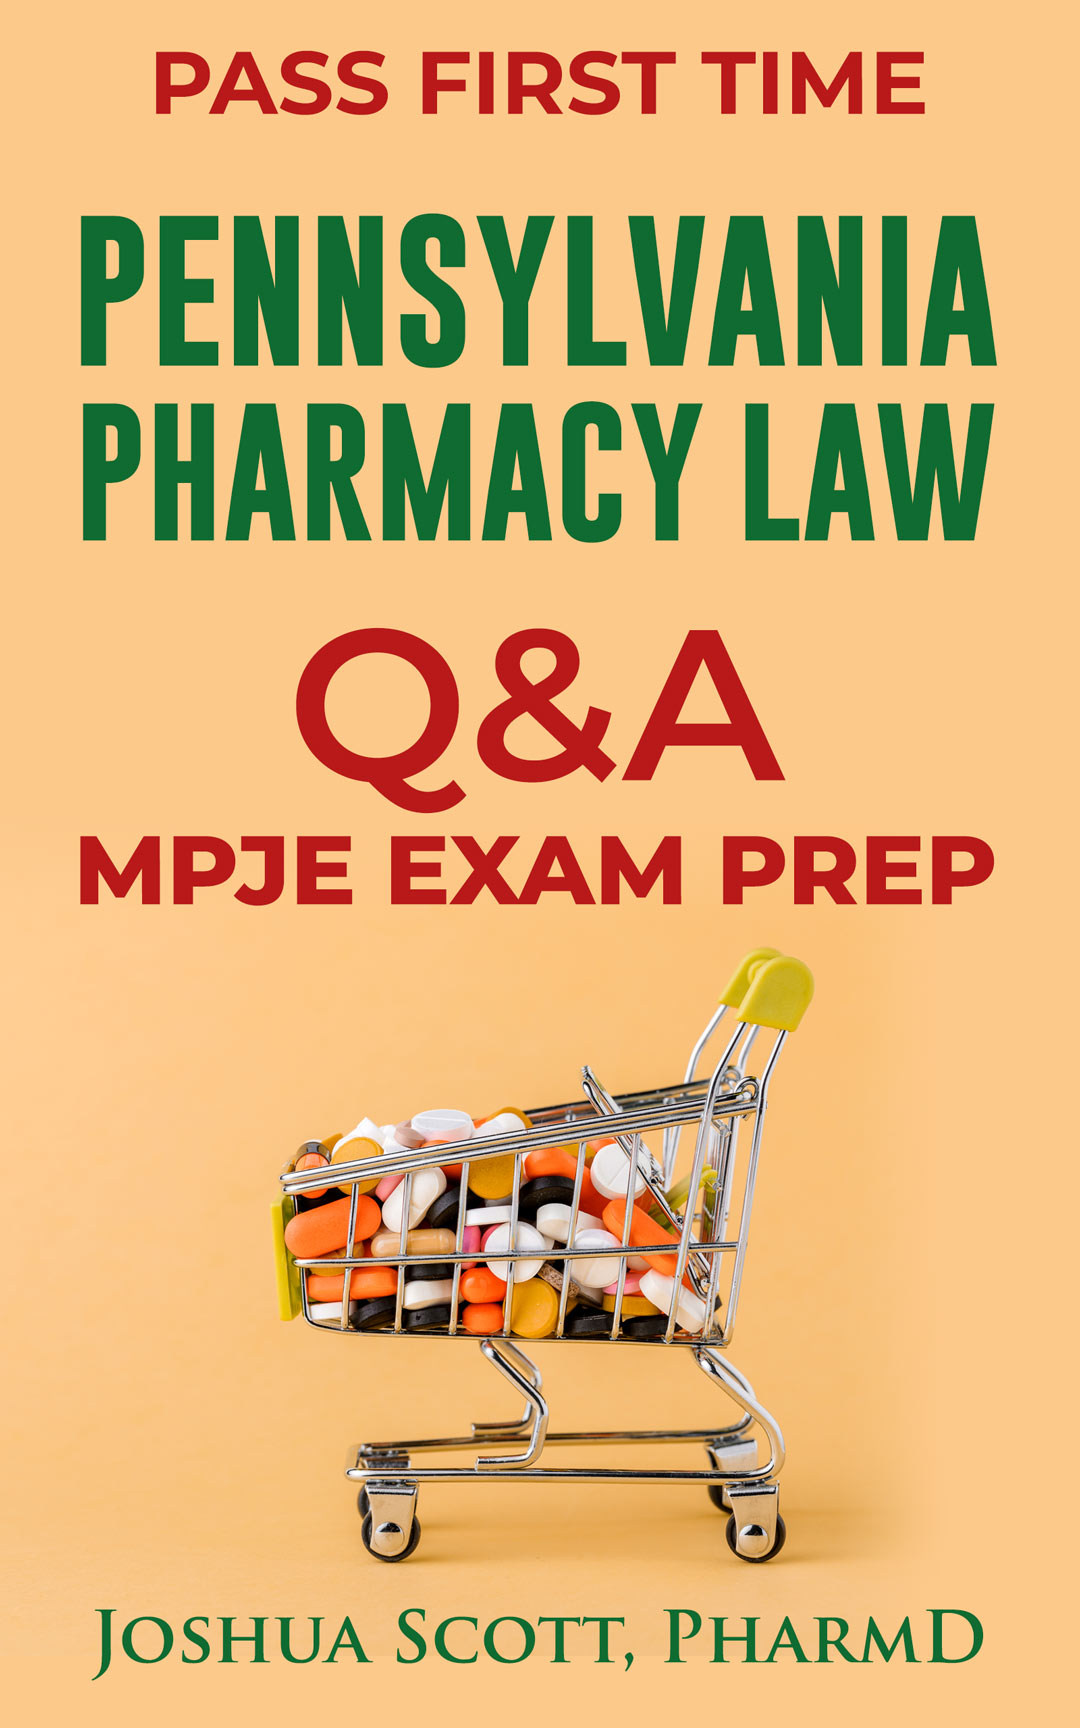 Pennsylvania Pharmacy Law MPJE Exam Prep Q & A